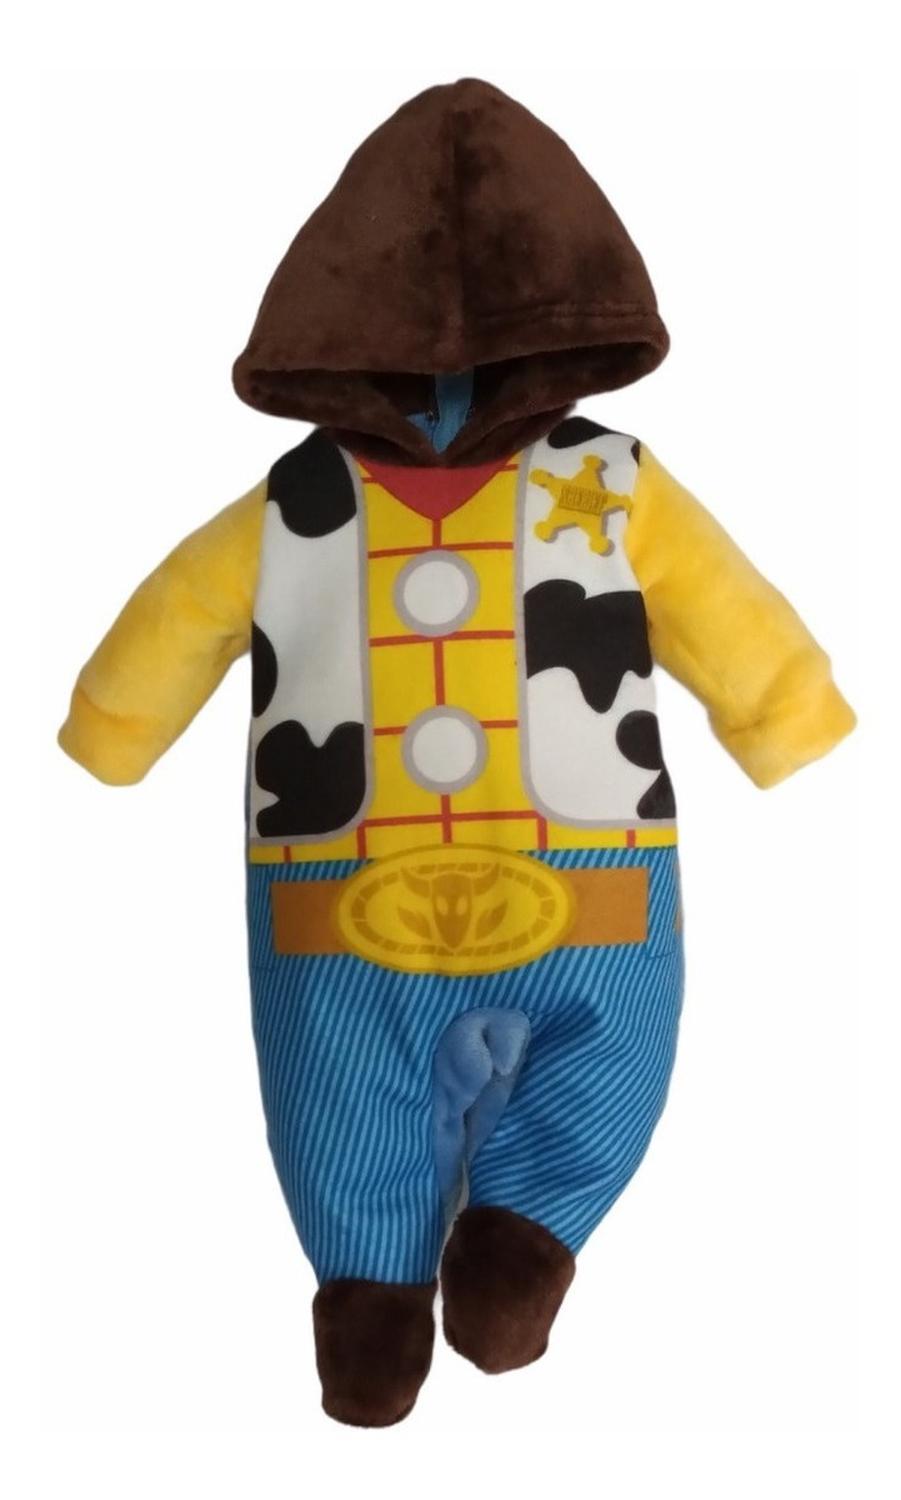 Kit 3 Mamelucos Disney para Bebé con Gorro Bordado Toy Story Bunny, Ducky, Woody